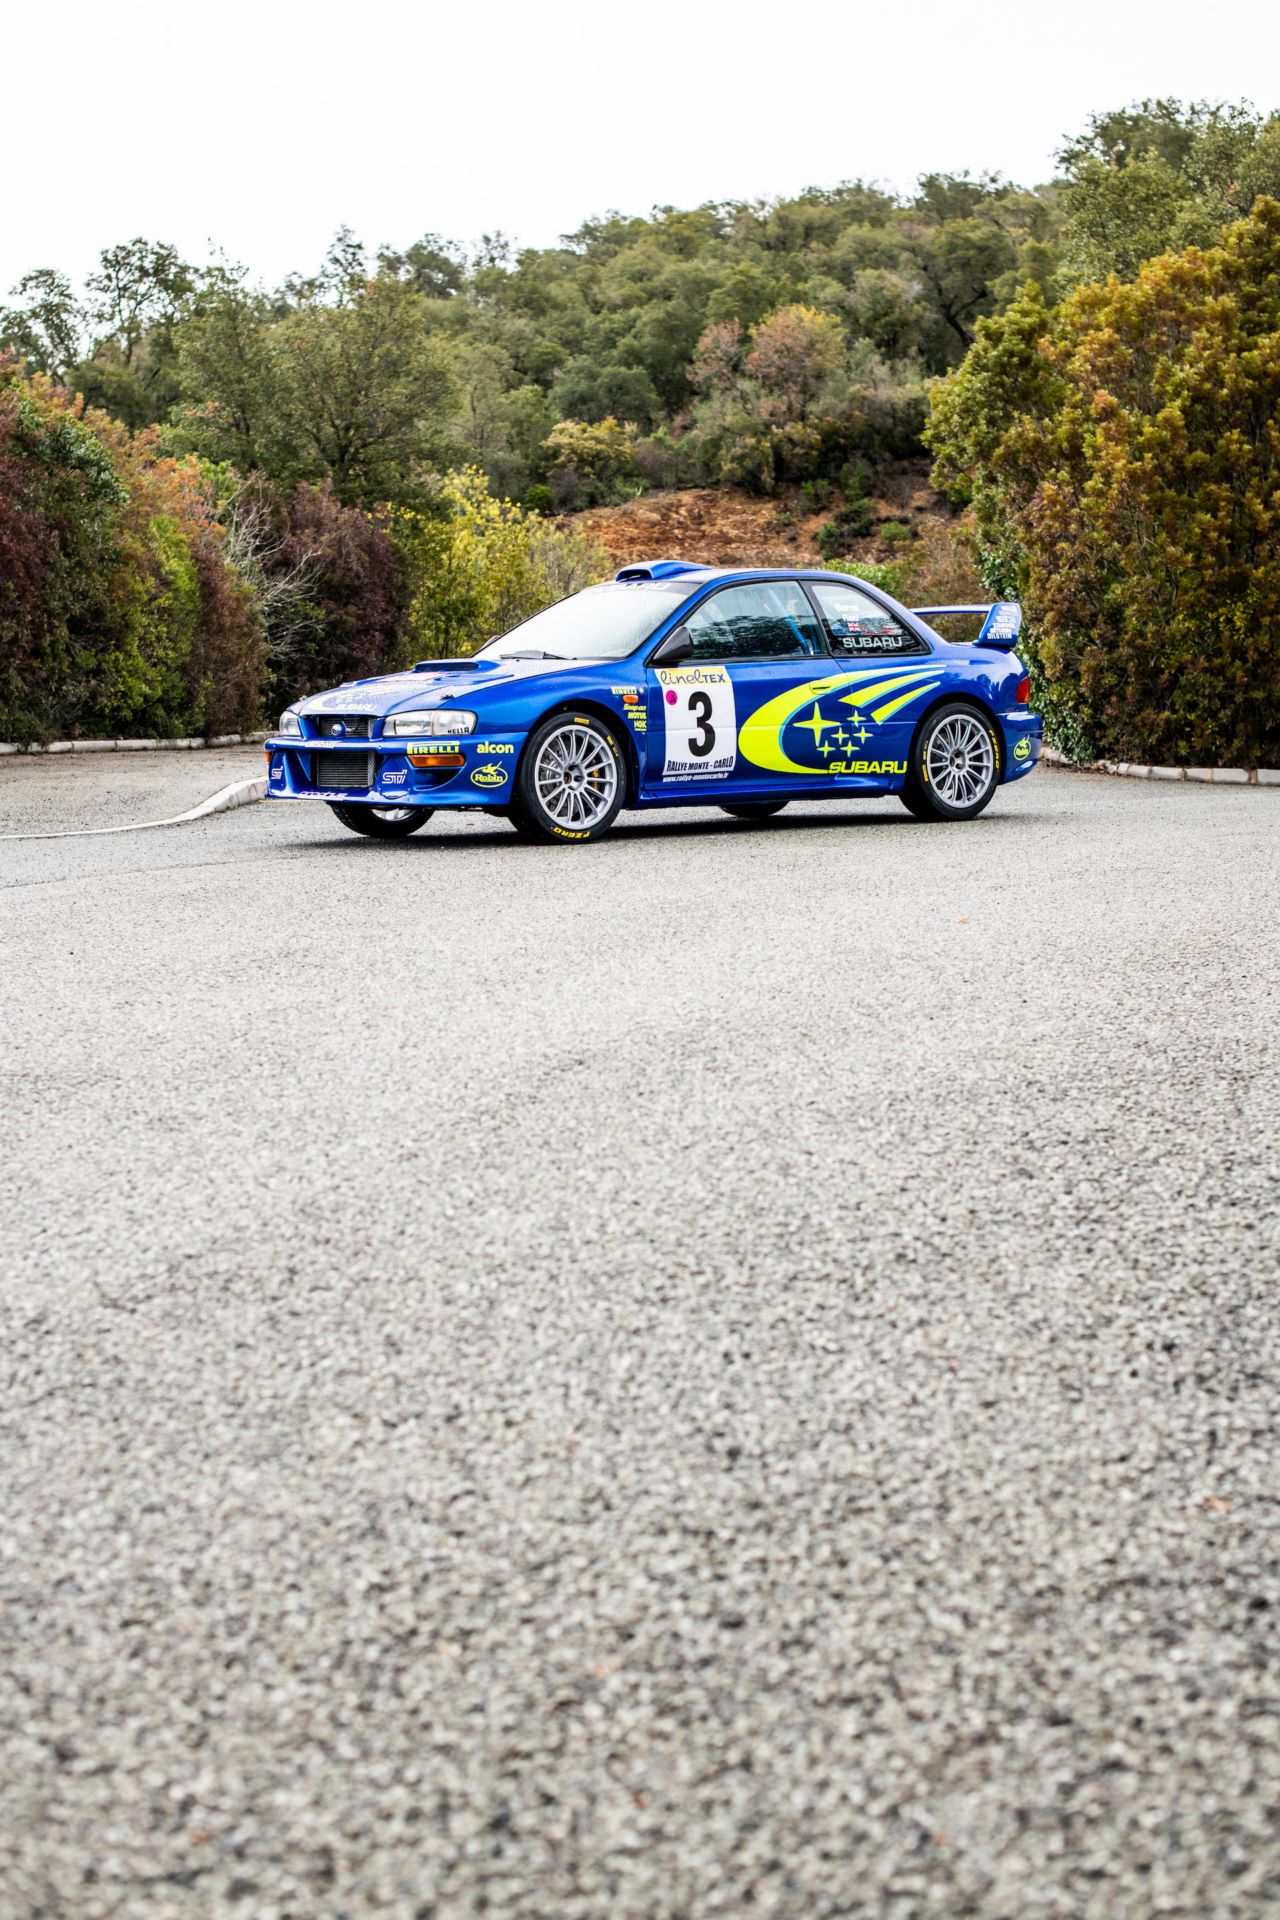 Subaru-Impreza-WRC-Richard-Burns-auction-68